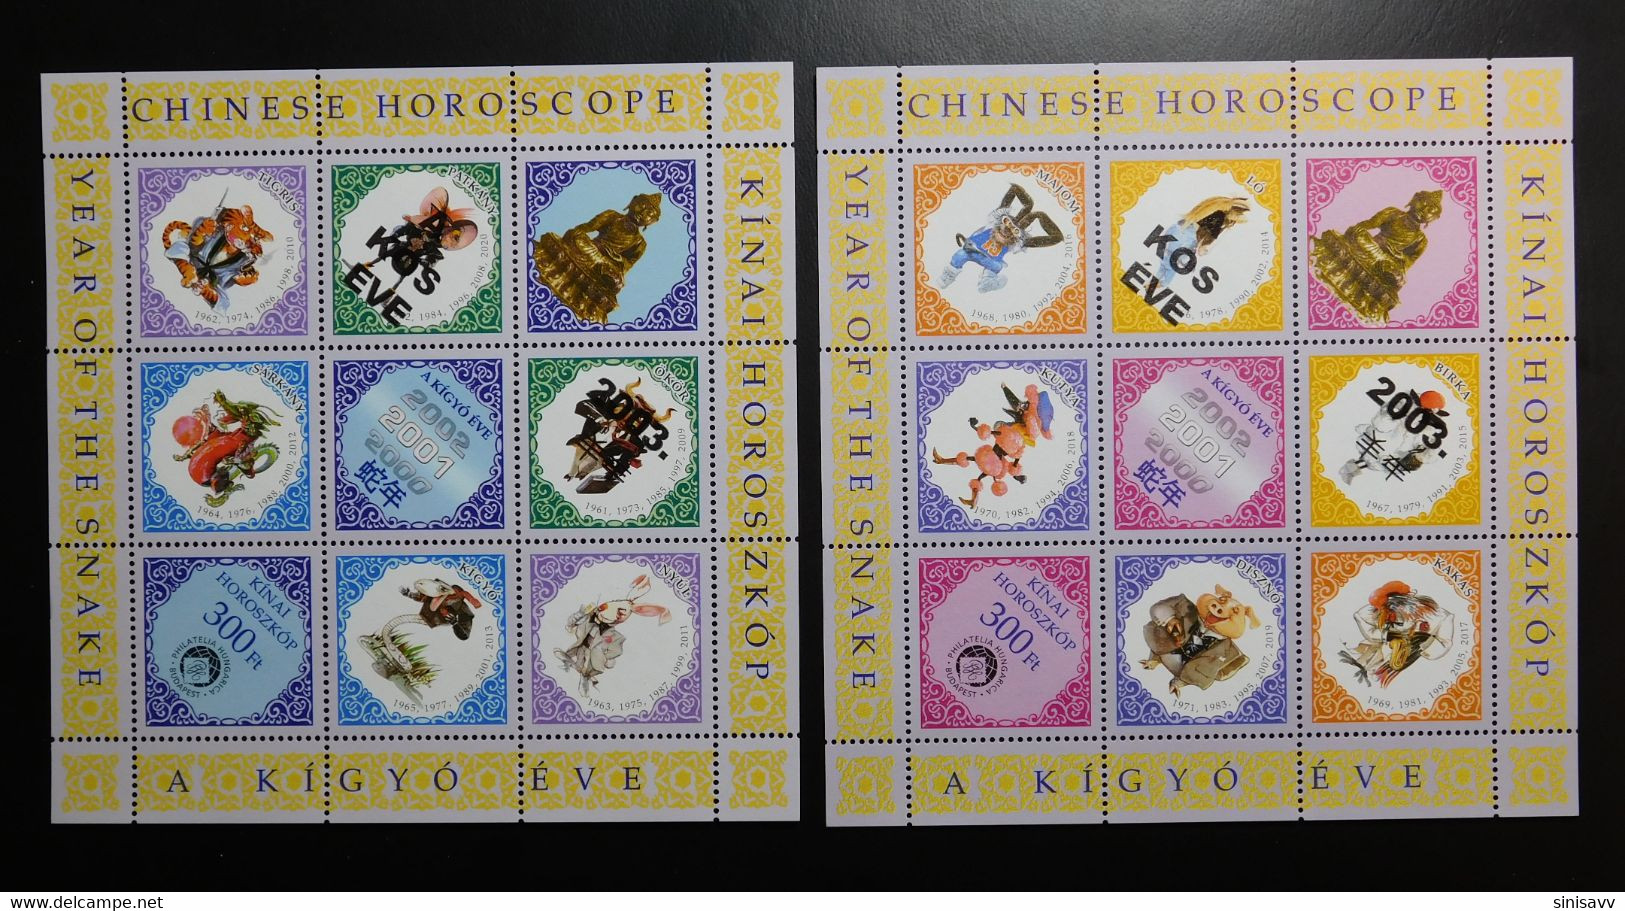 HUNGARY - 2003 - Commemorative Sheet Pair - Chinese Horoscope / Year Of The Ram MNH! - Commemorative Sheets